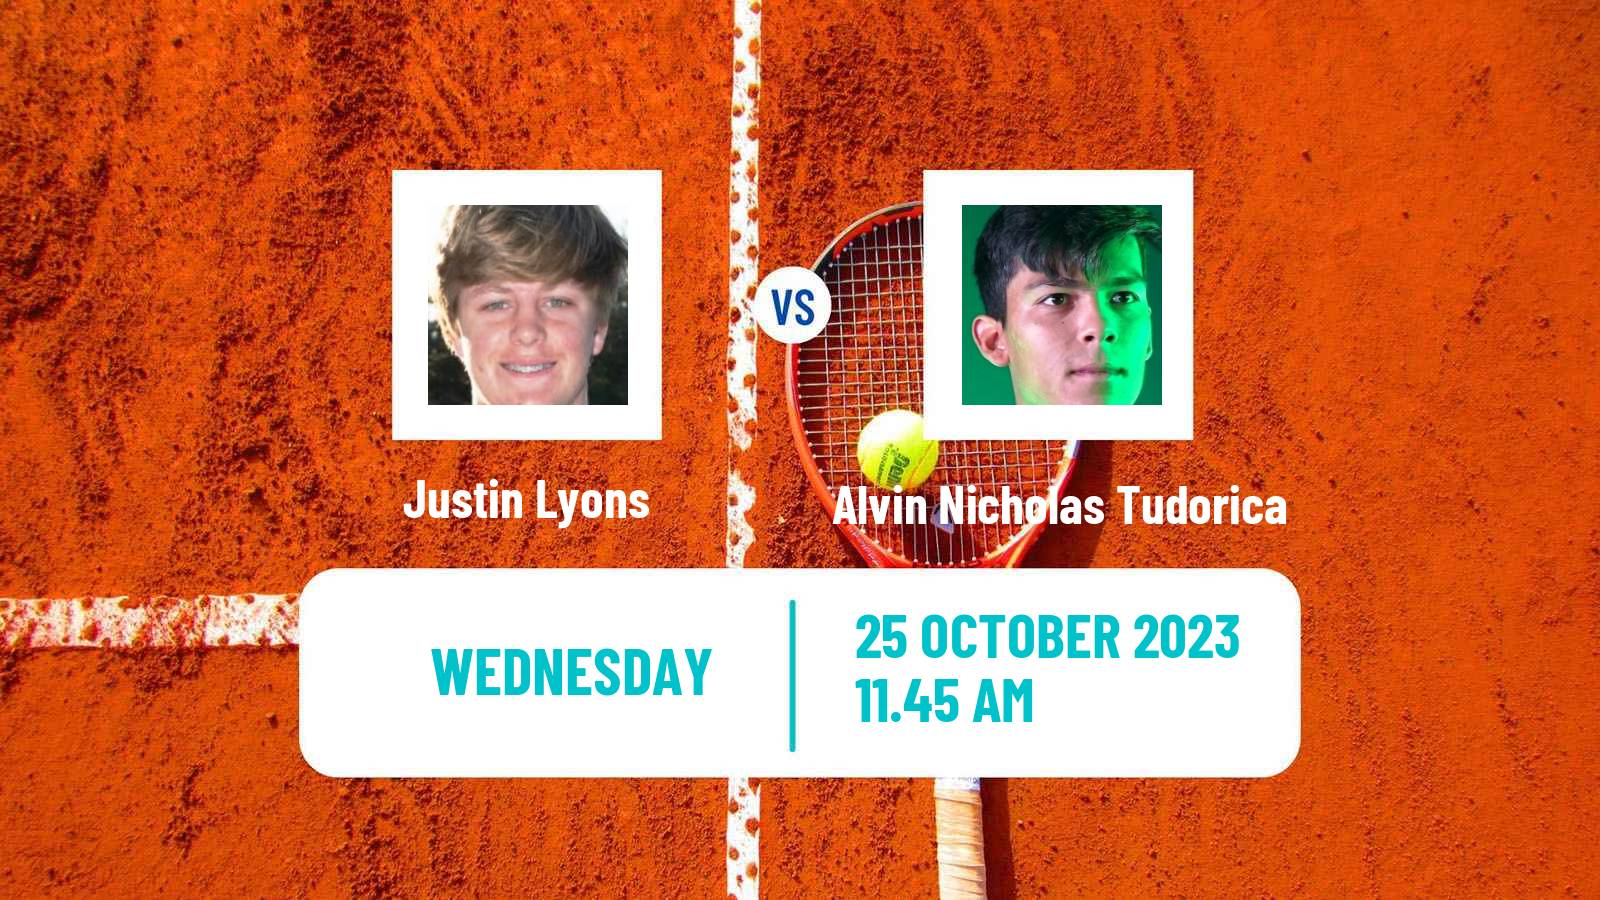 Tennis ITF M15 Tallahassee Fl Men Justin Lyons - Alvin Nicholas Tudorica